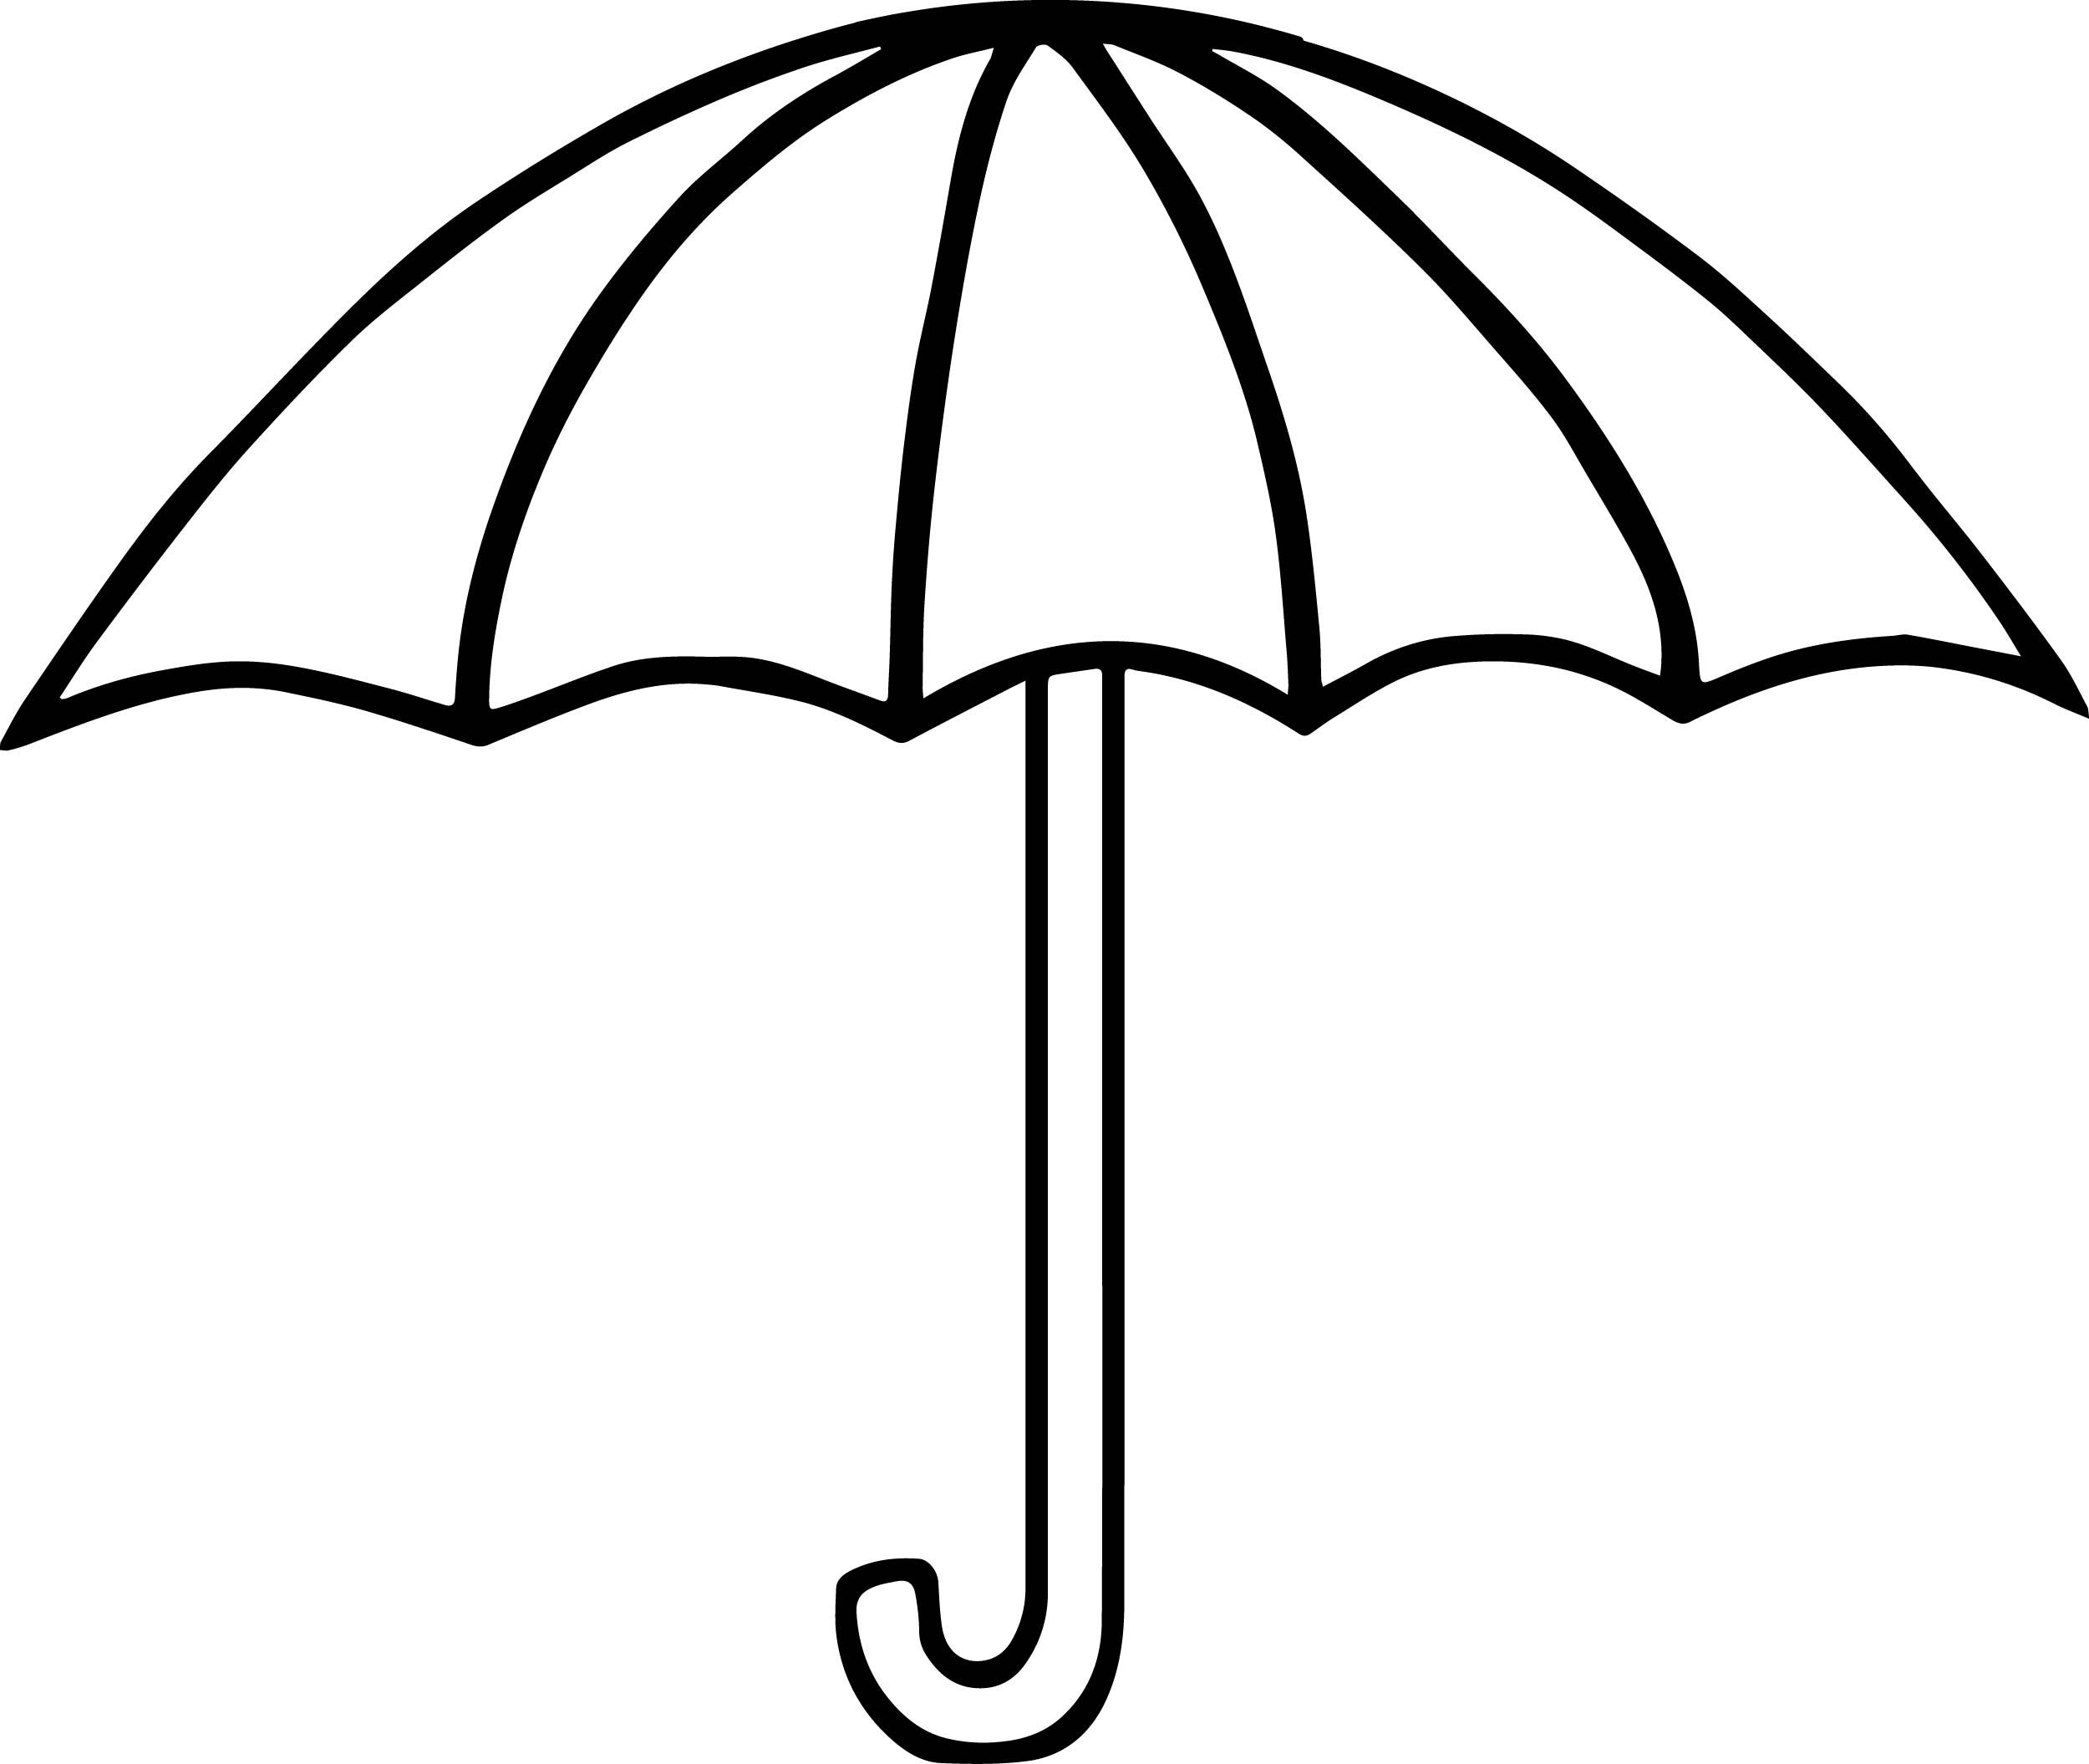 Printable Umbrella Template